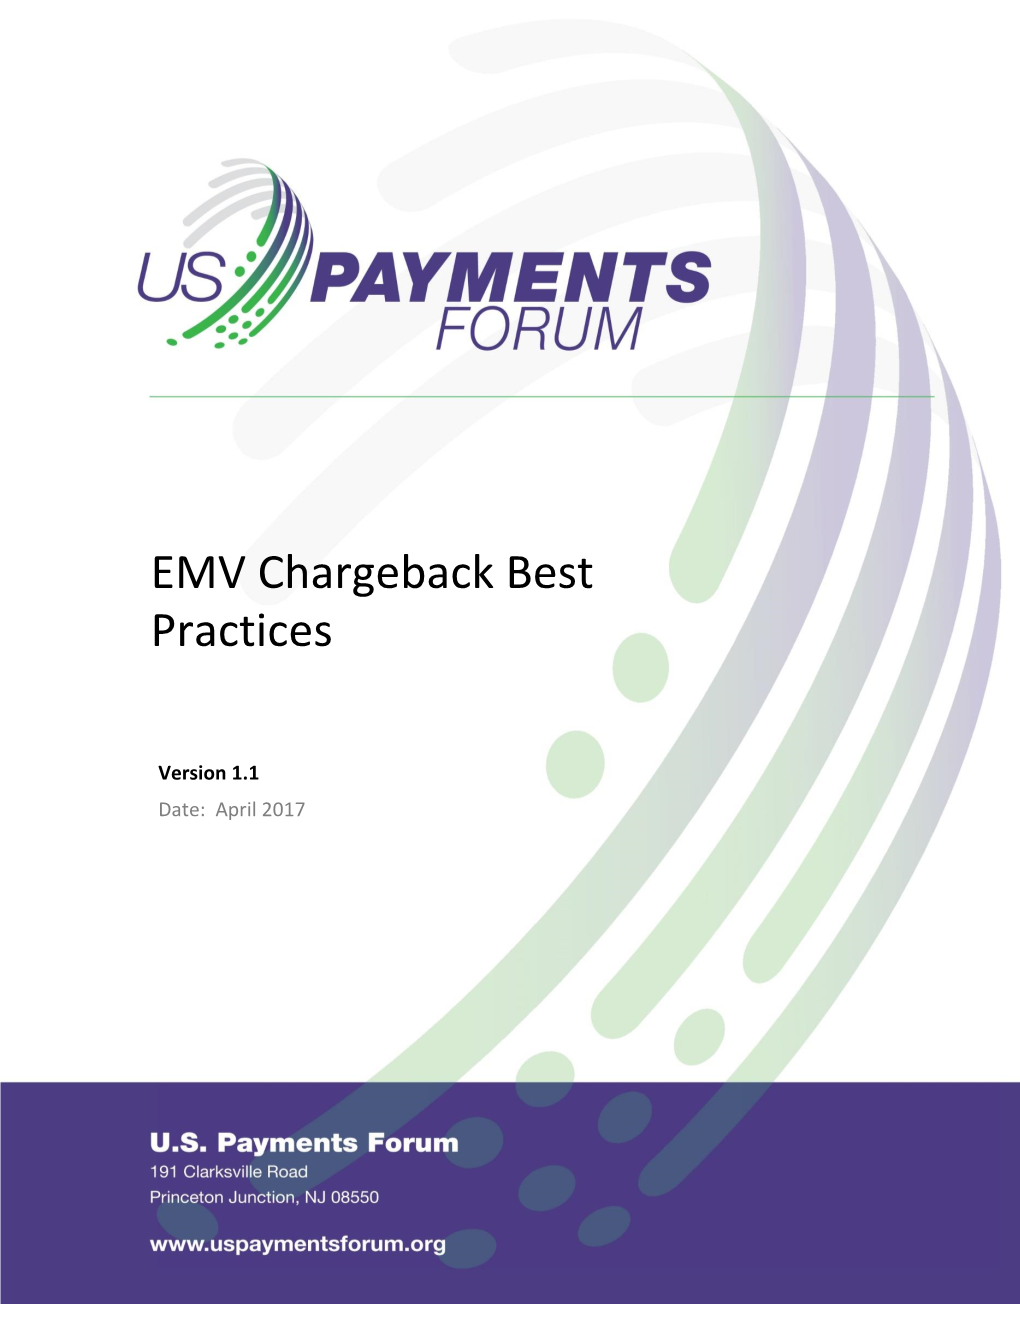 EMV Chargeback Best Practices